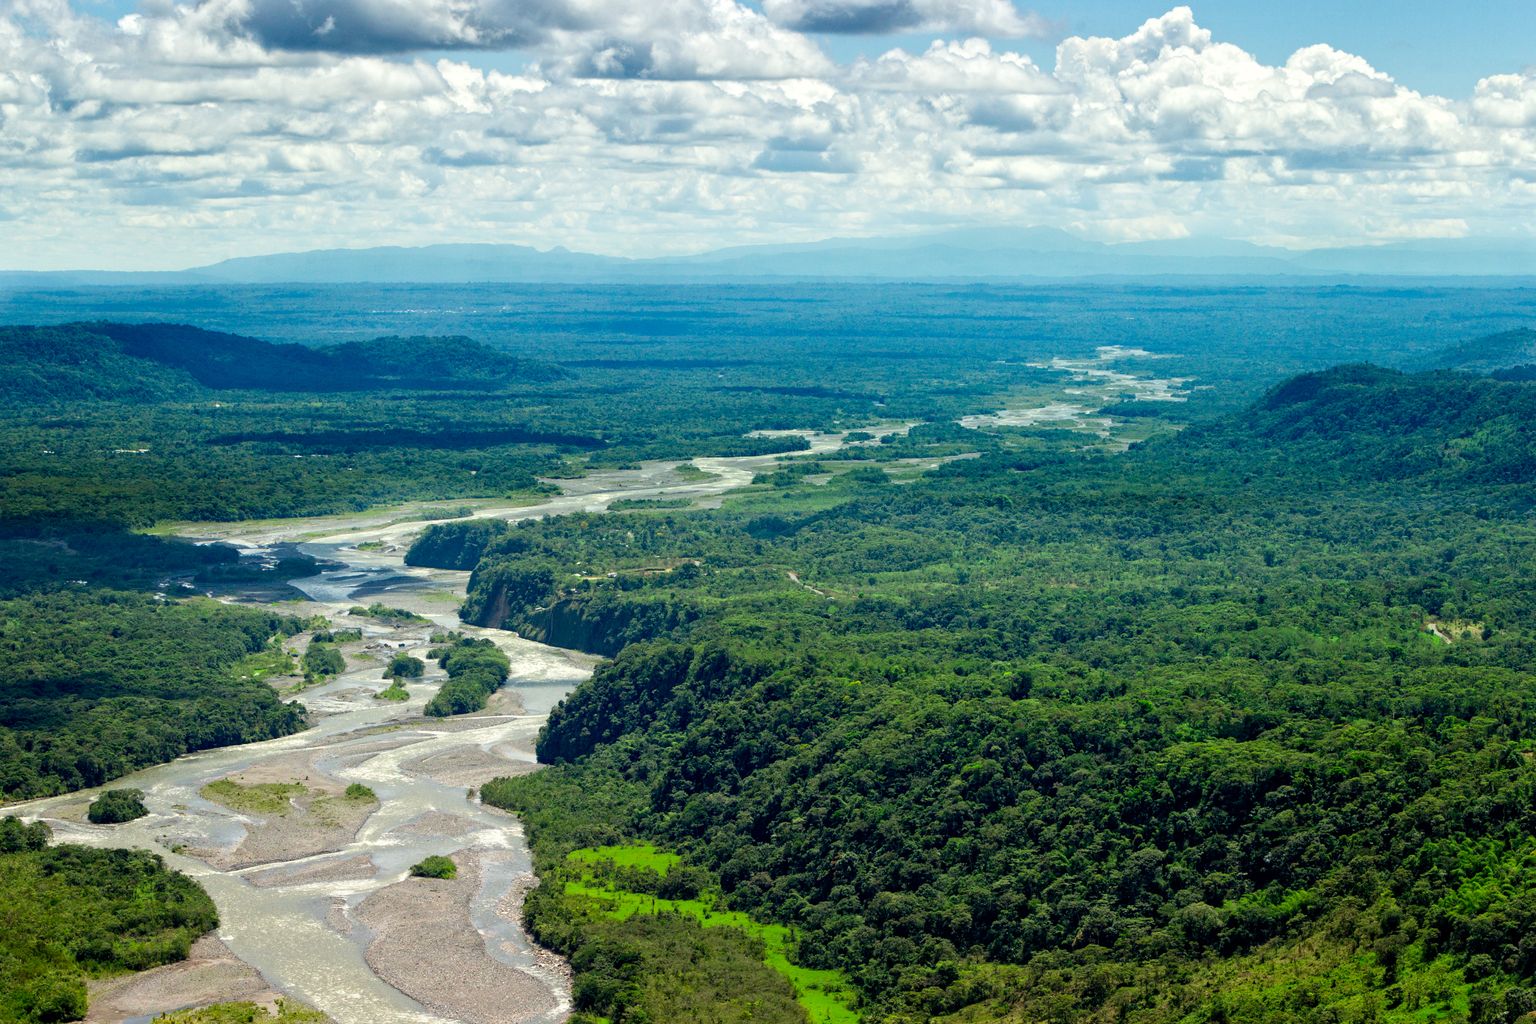 Amazonase vihmamets. Pilt on illustreeriv